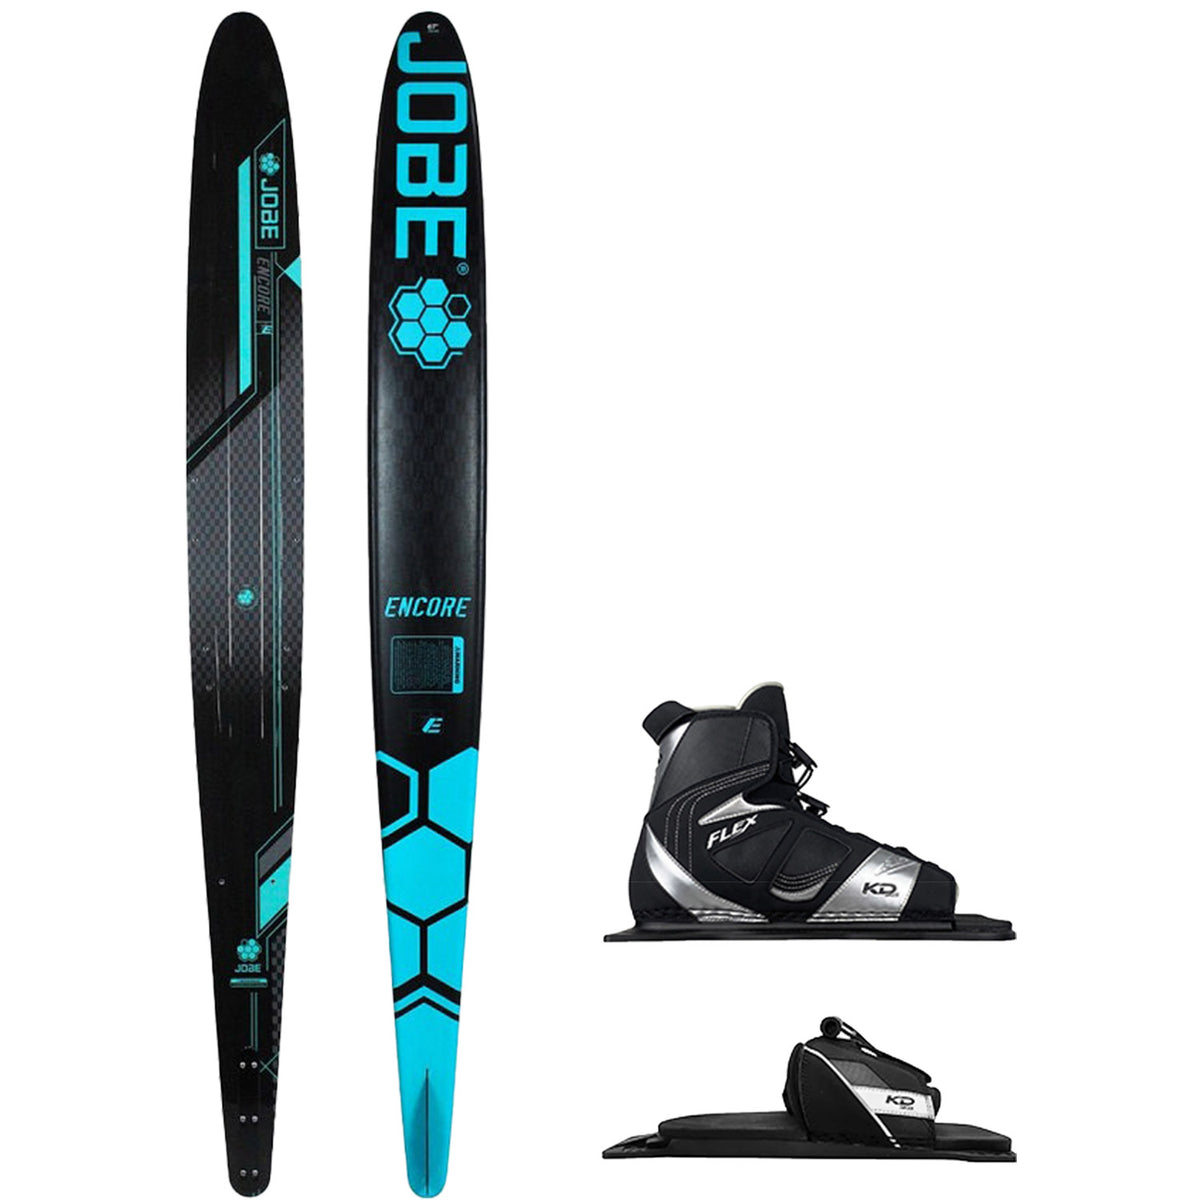 Encore Slalom Ski w/ Flex Boot Package